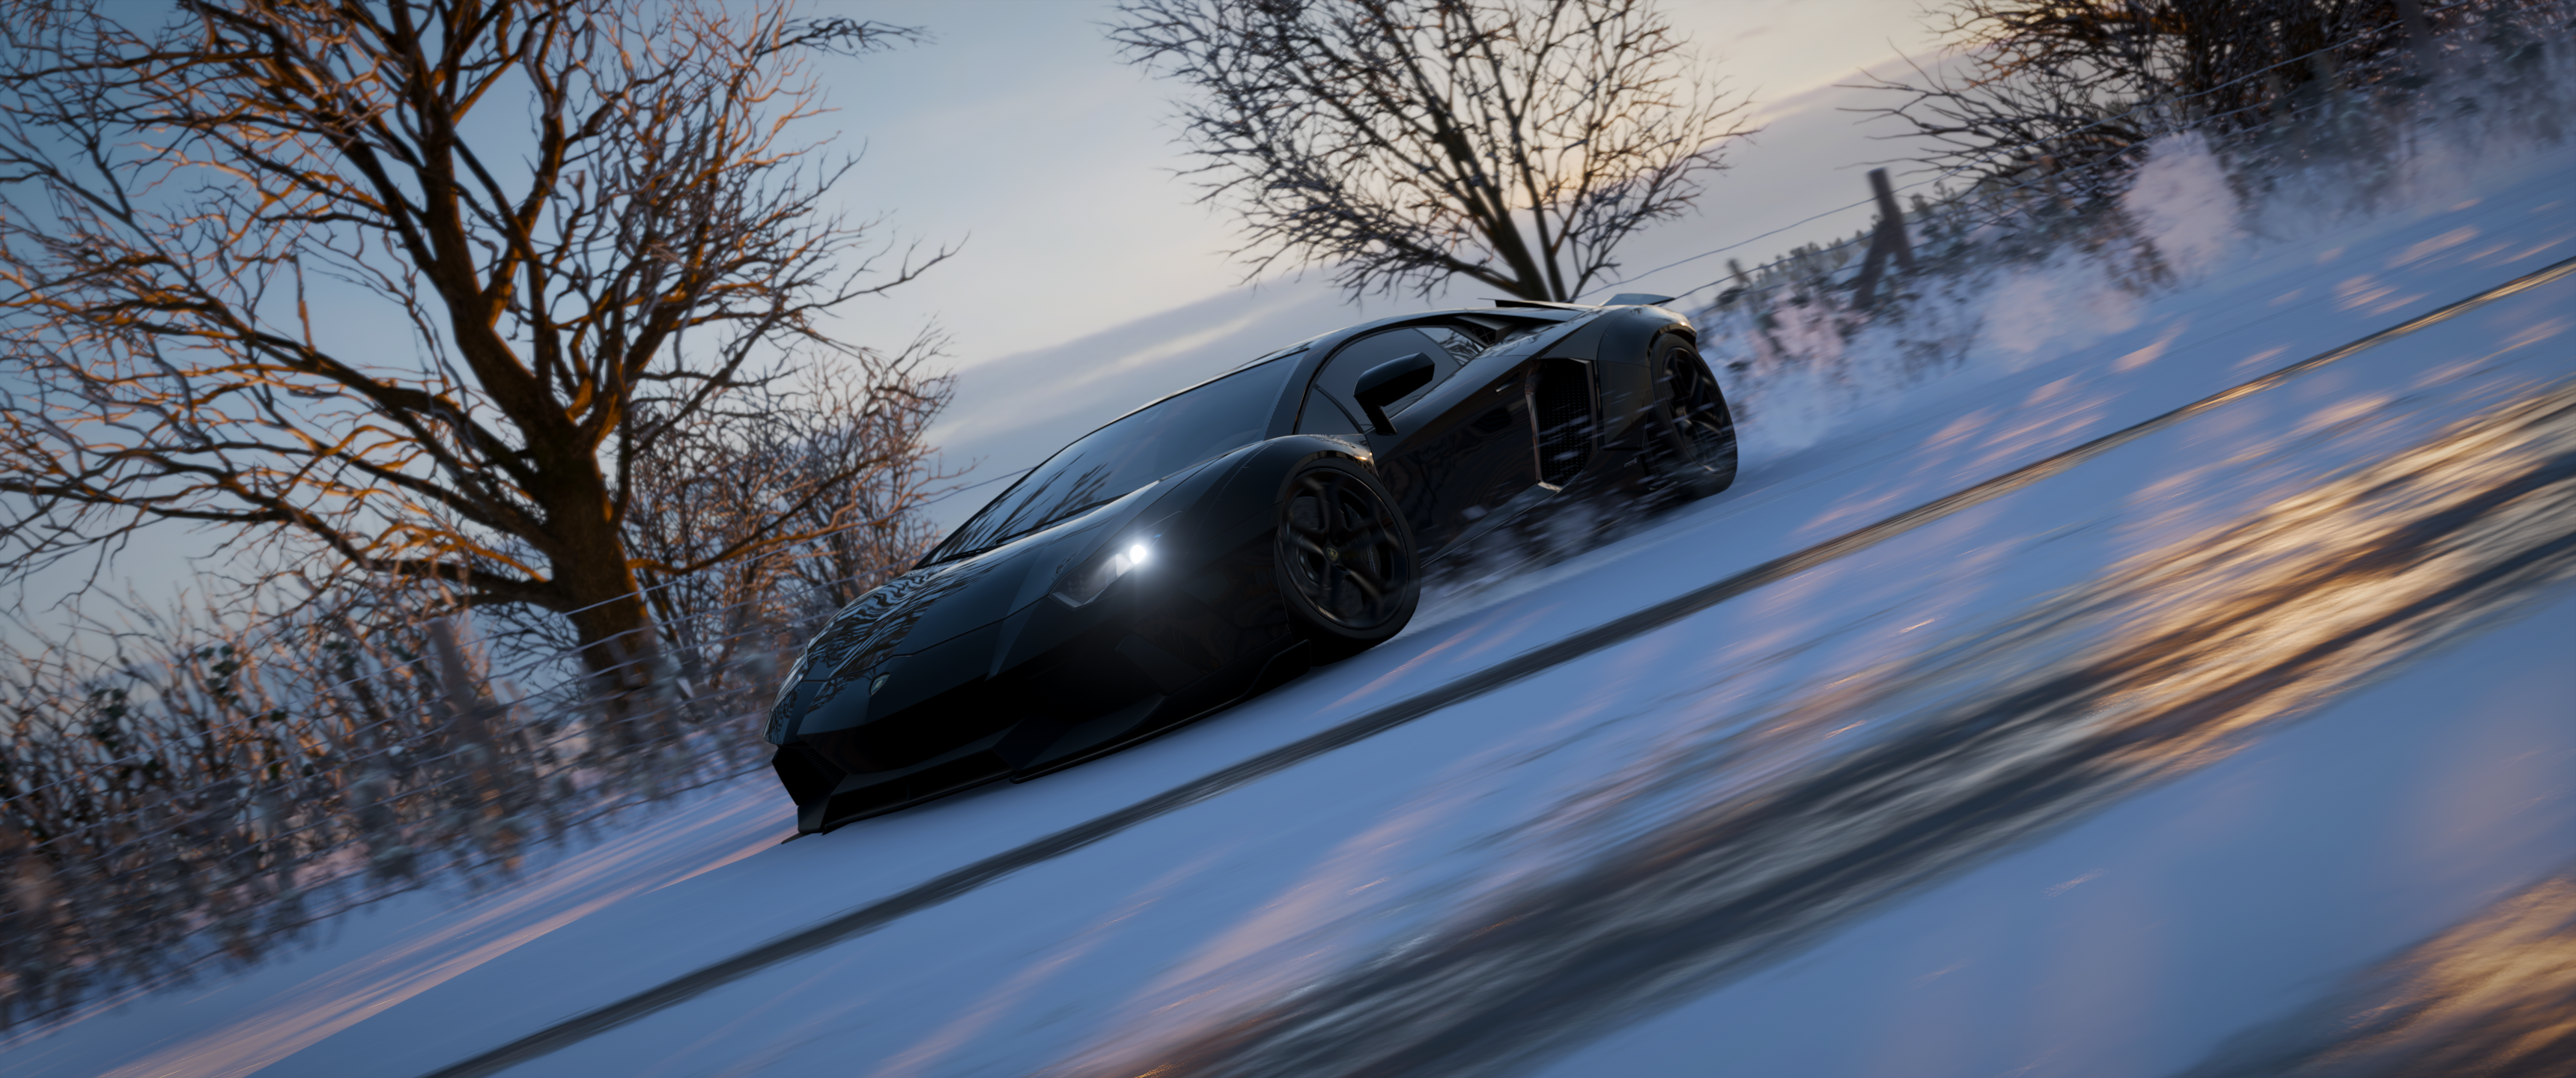 Forza Horizon 4, car, Lamborghini Aventador J, PC gaming ...